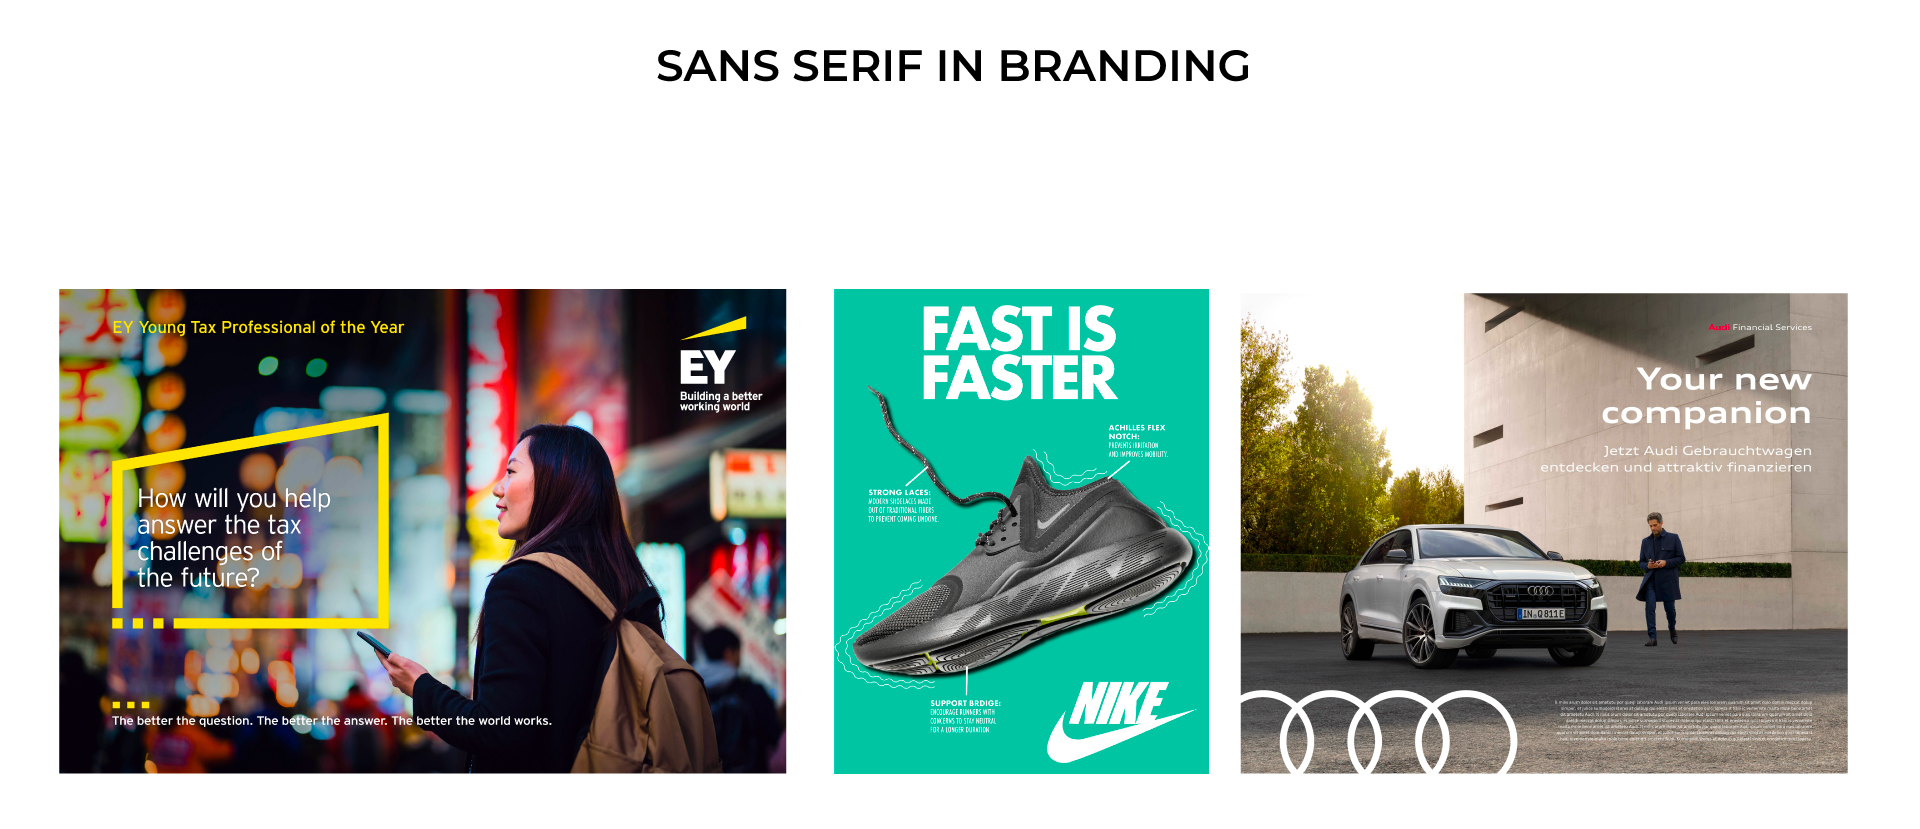 Sans Serifs in Branding Examples